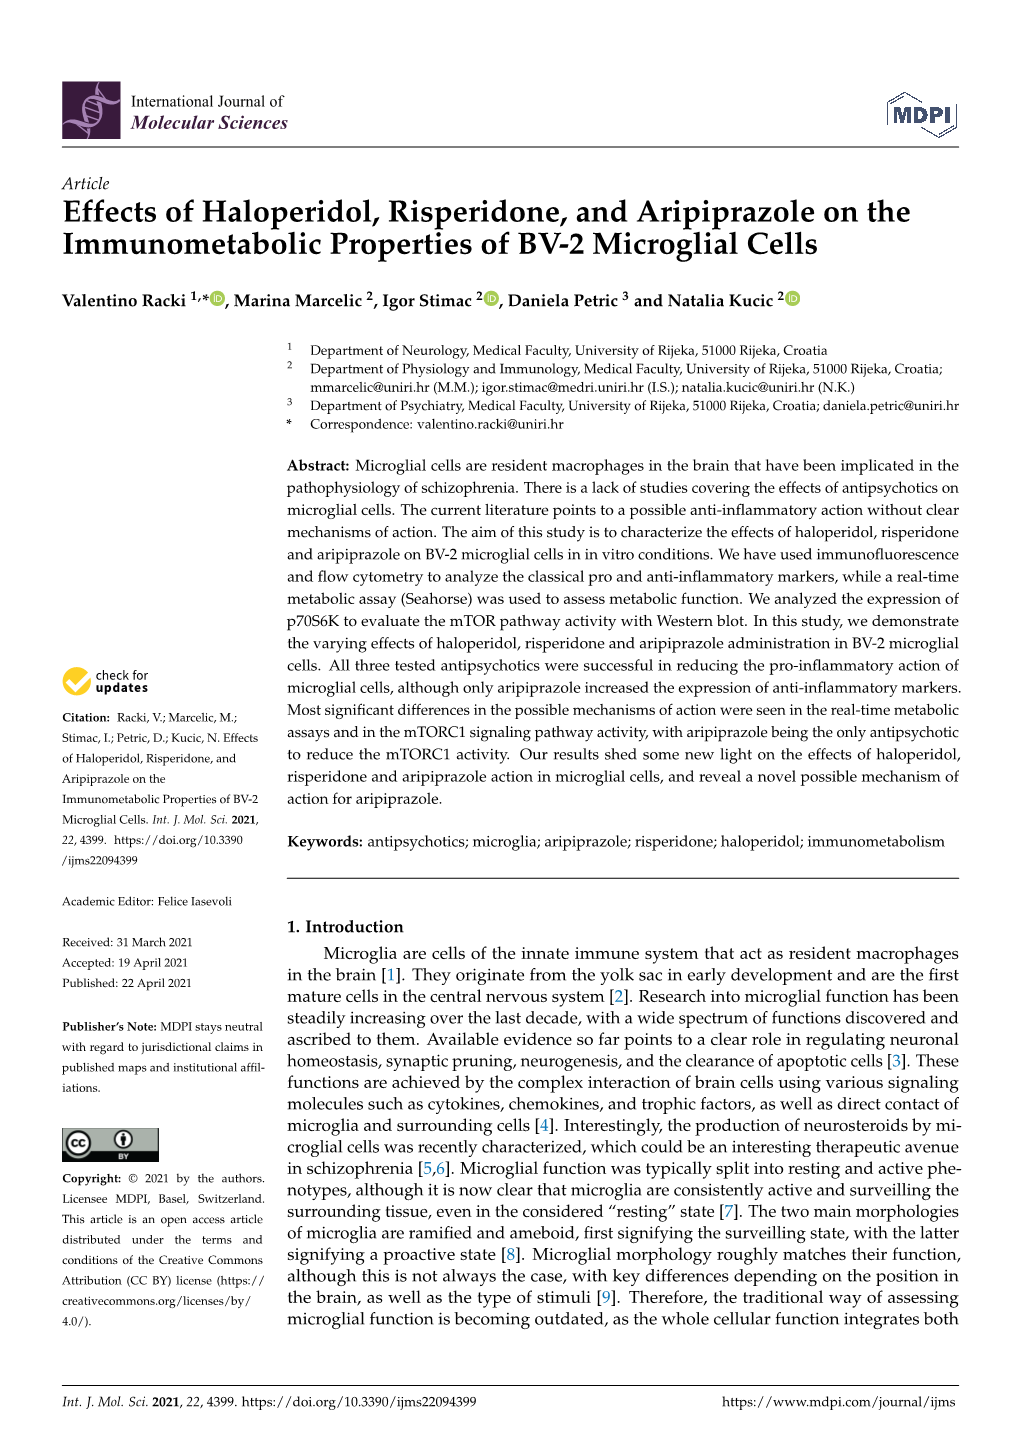 Effects of Haloperidol, Risperidone, and Aripiprazole on the Immunometabolic Properties of BV-2 Microglial Cells